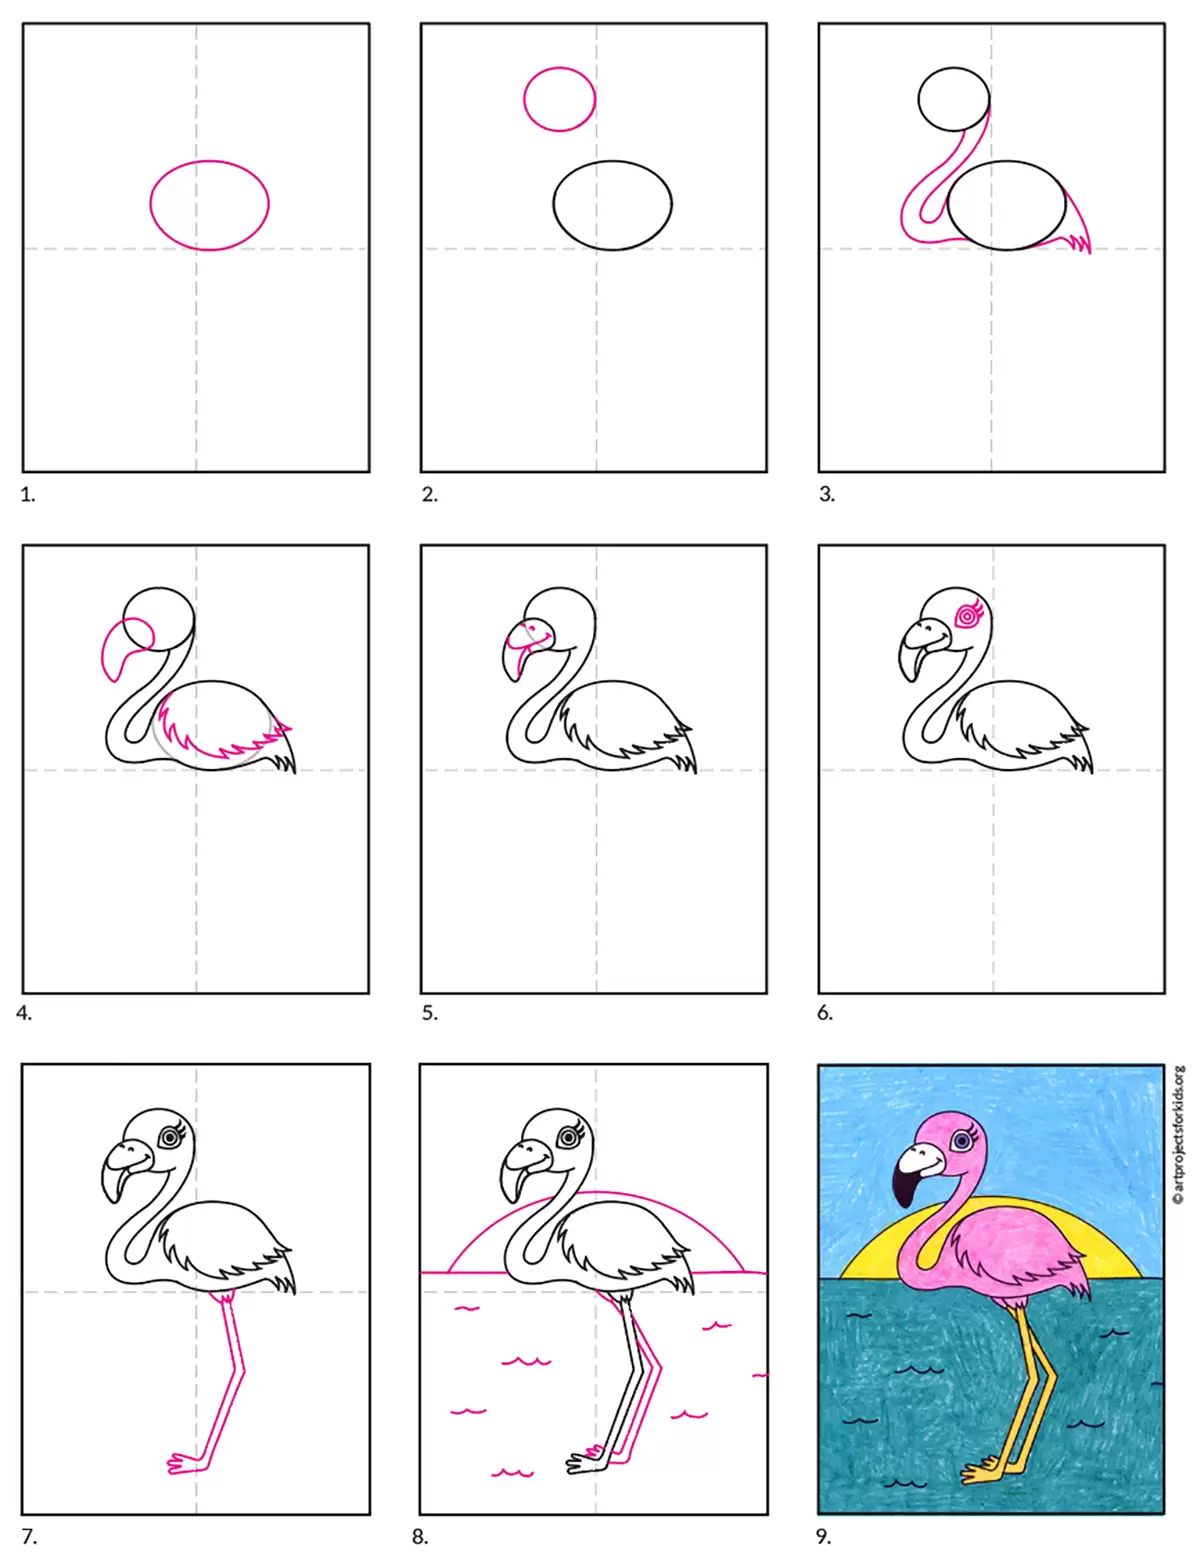 Flamingo bird very simple cartoon style outline drawing on Craiyon